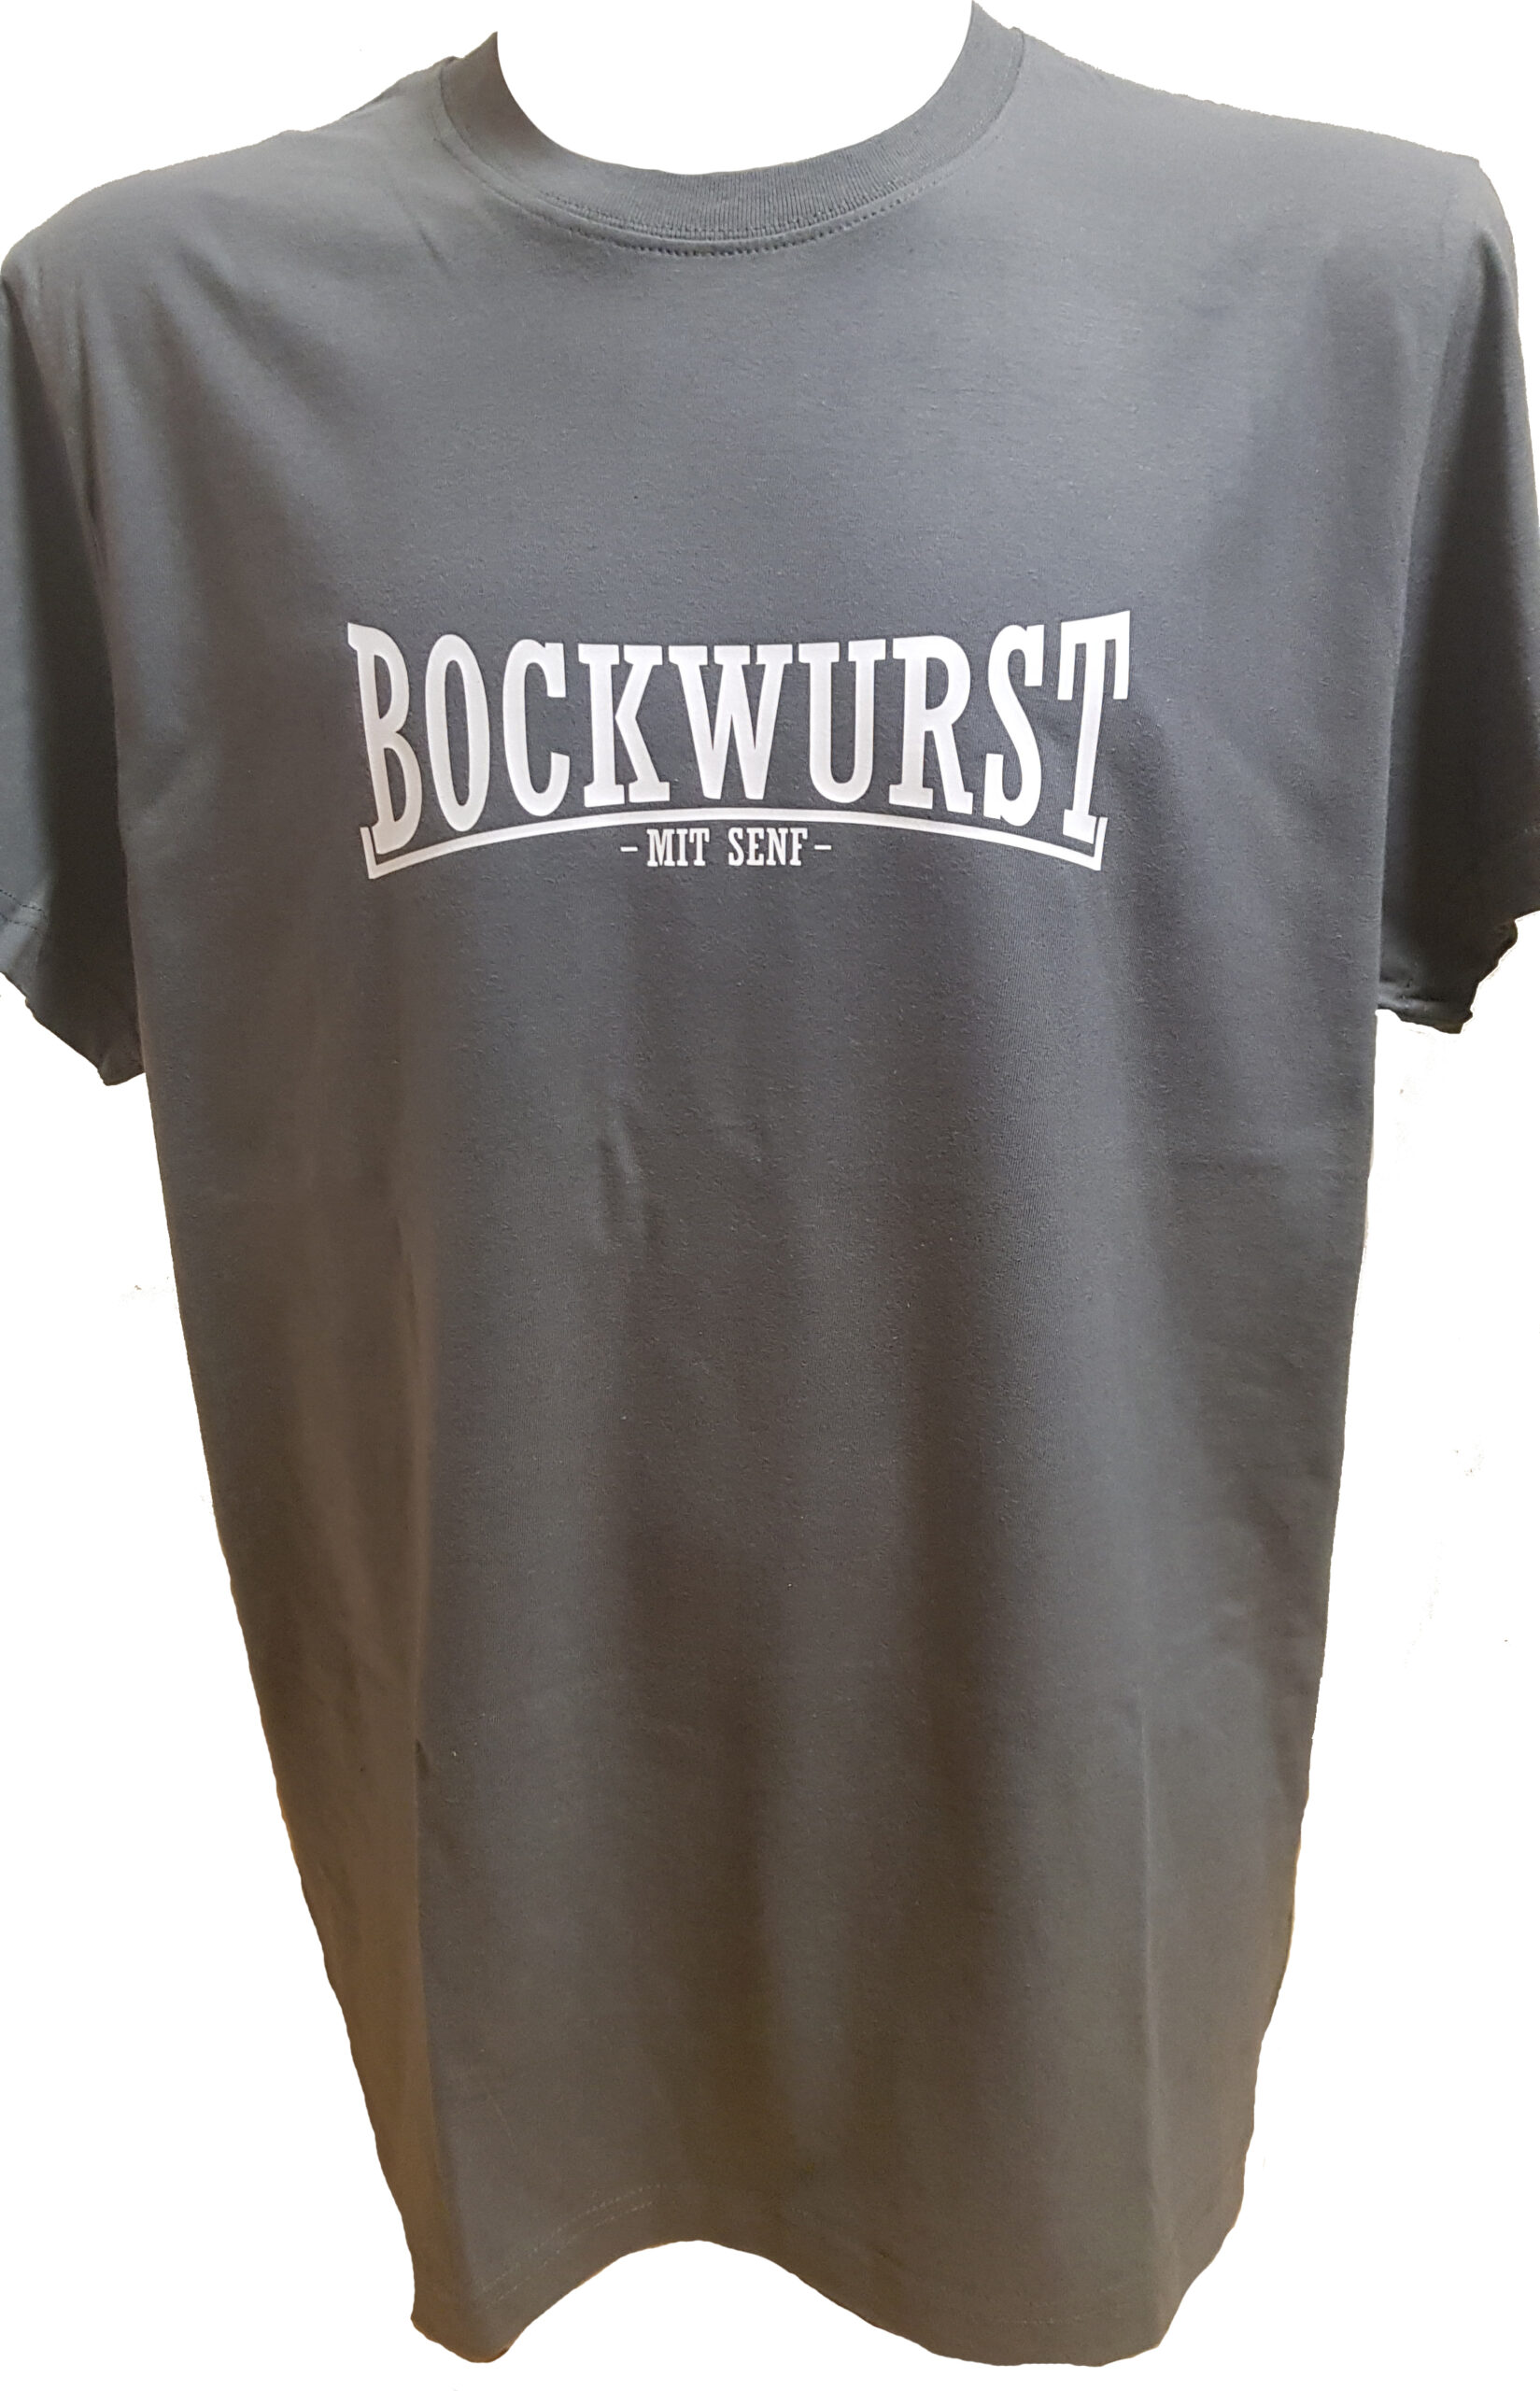 mit – Senf Merchandise T-Shirt Bockwurst Shadow